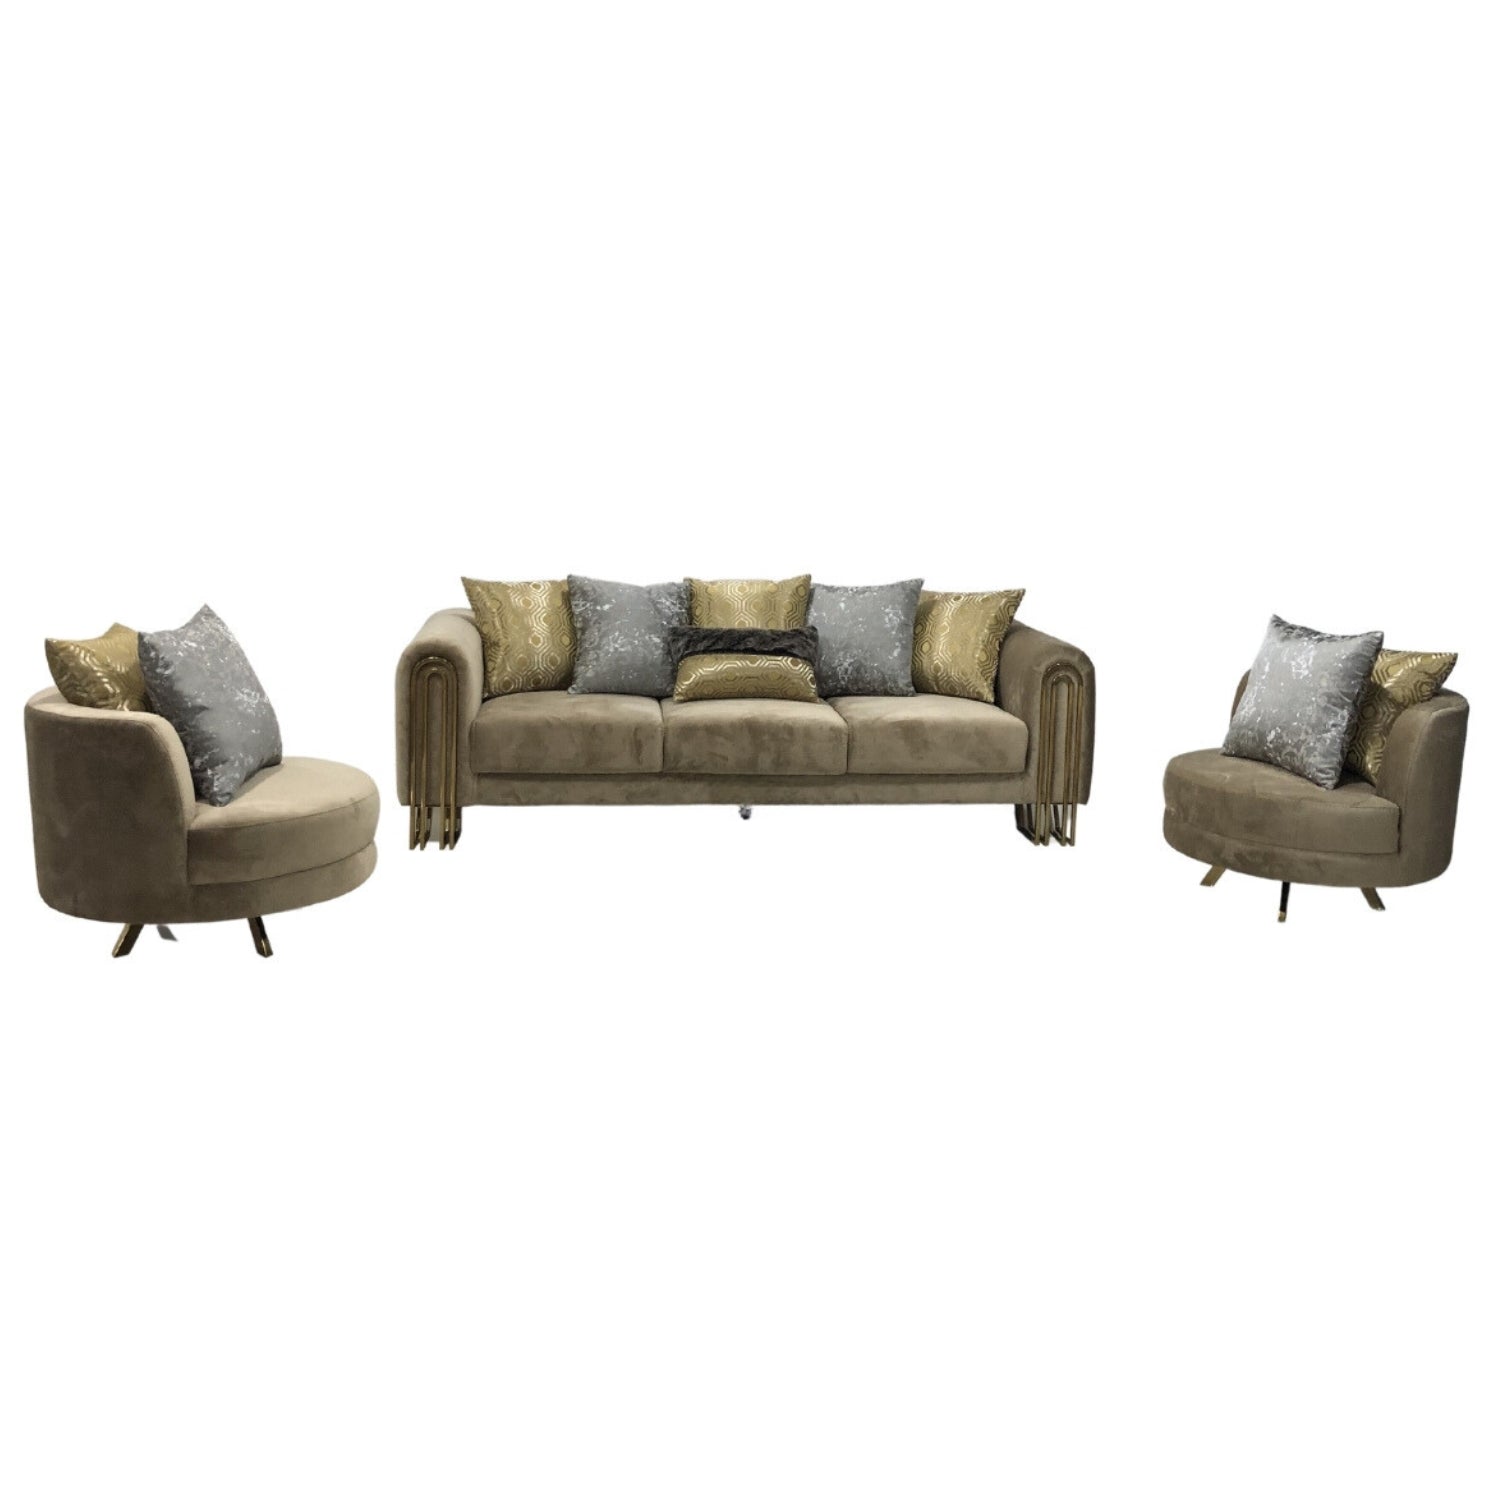 geneva-sofa-and-armchair-set-gold-metal-base-sienna-brown-in-lounge